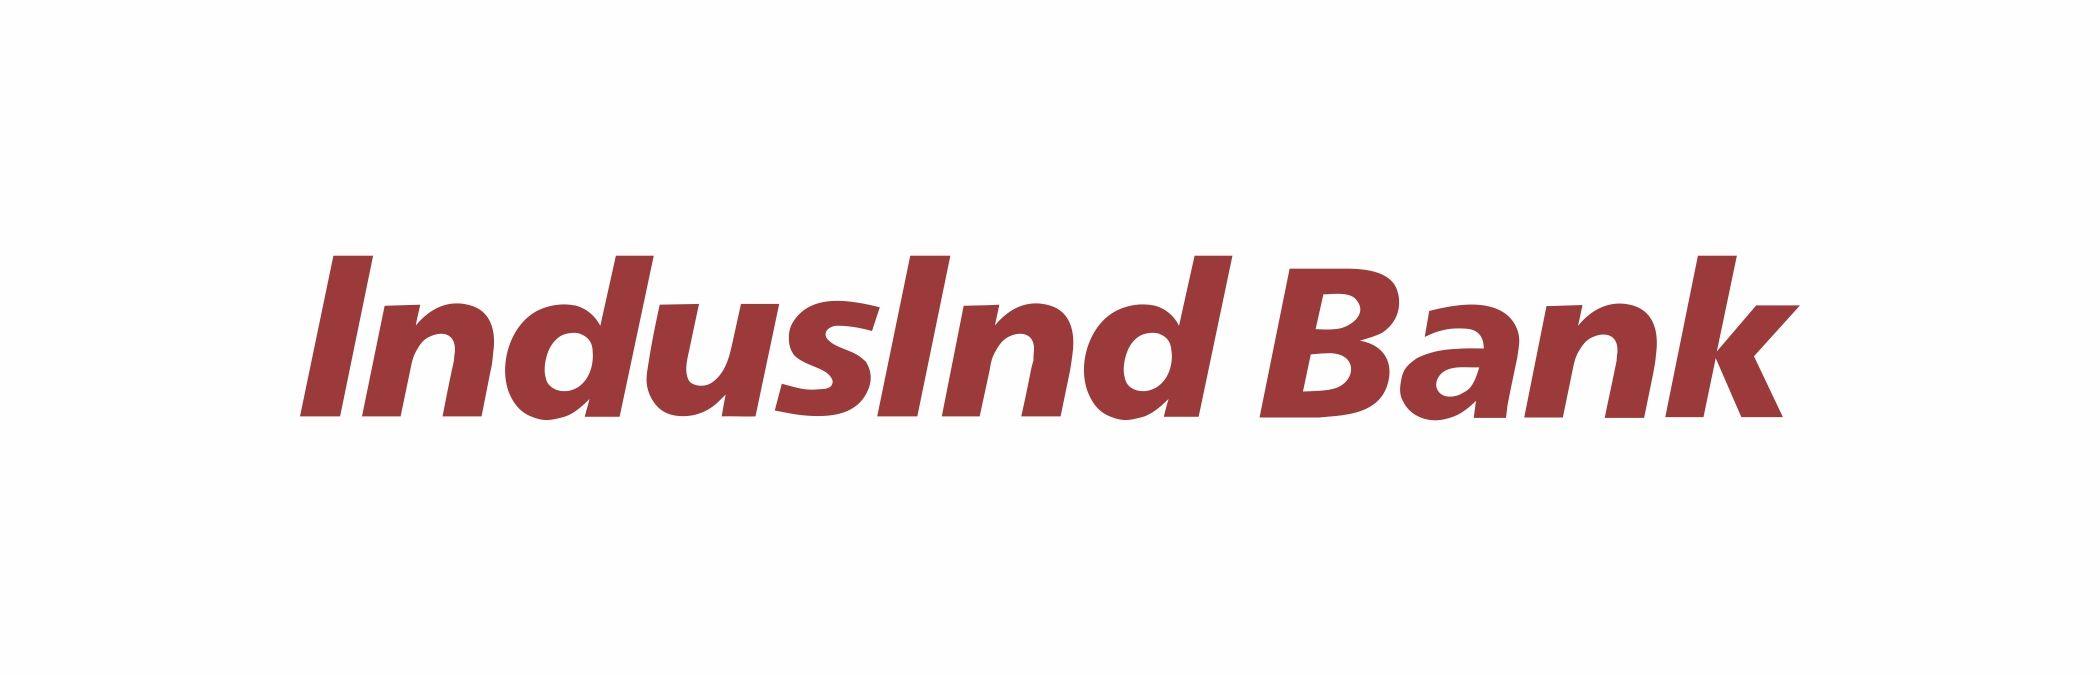 Bank Brand Logo - Brand Logo Downloads at IndusInd Bank